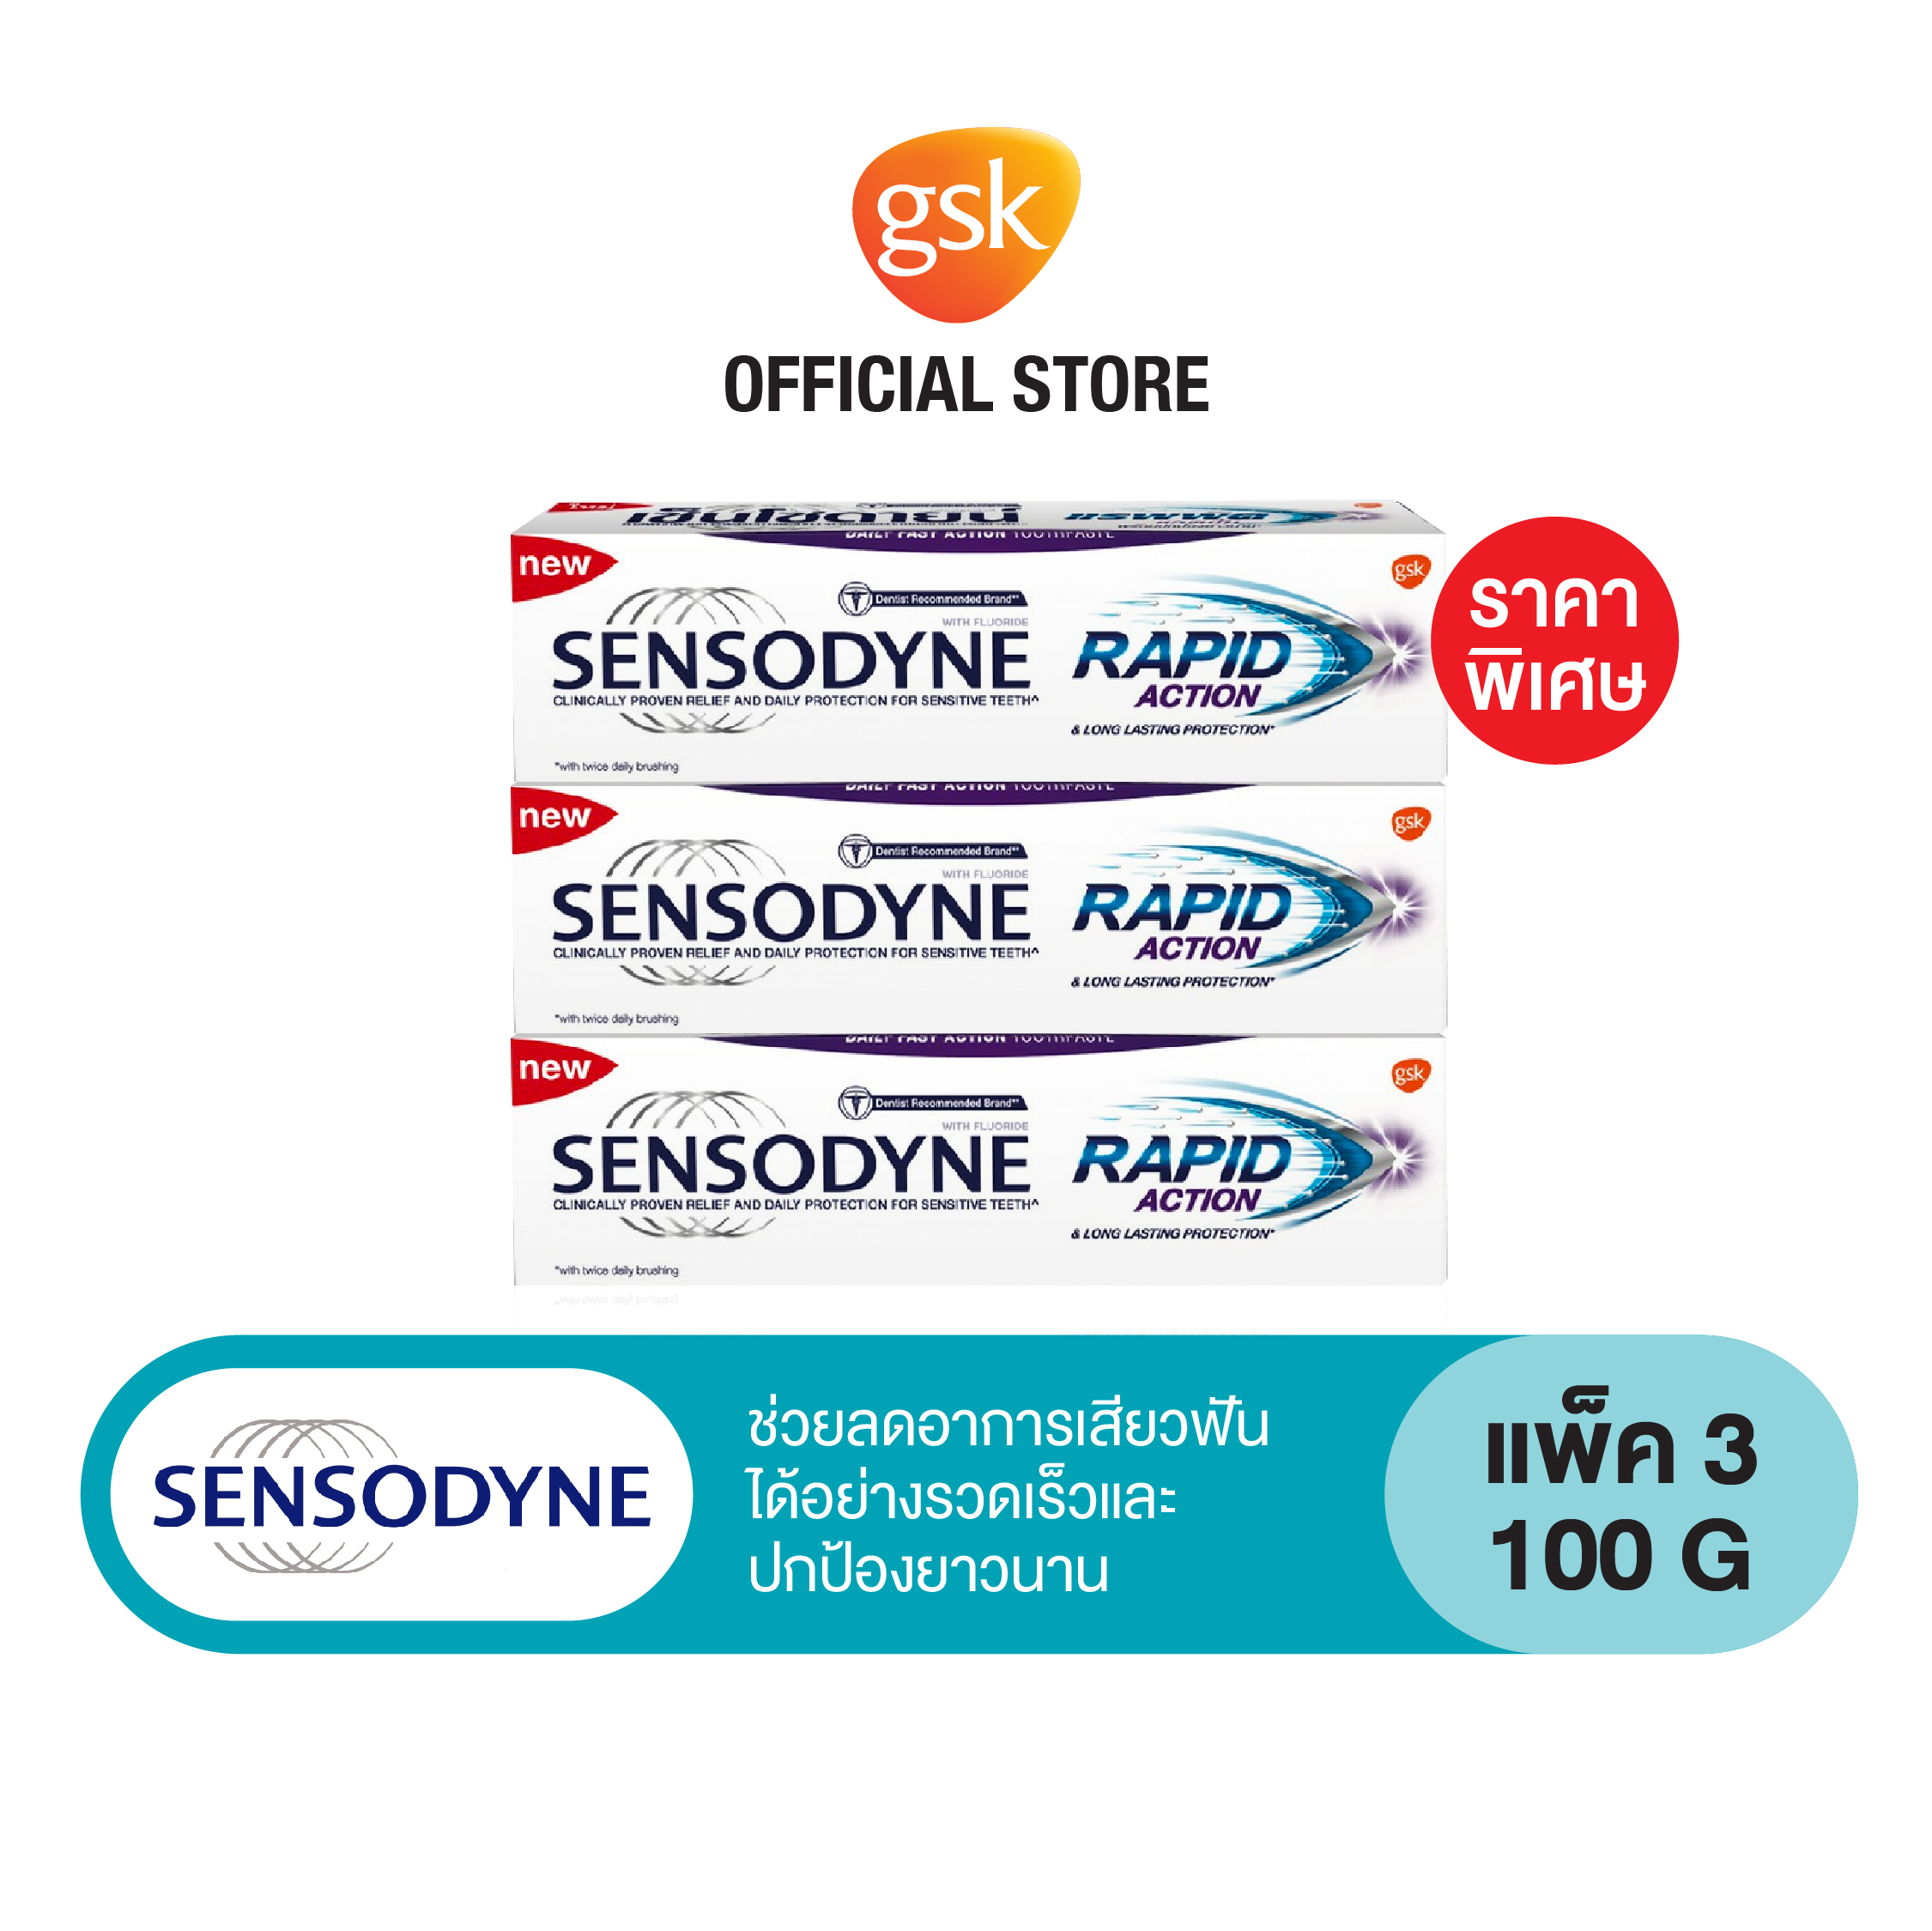 SENSODYNE RAPID ACTION 100G x 3 HELP REDUCE TOOTH SENSITIVITY FAST & LONG LASTING PROTECTION PREVENT TOOTH DECAY เซ็นโซดายน์ ยาสีฟัน สูตรแรพพิด แอคชั่น 100 กรัม x 3 ช่วยลดอาการเสียวฟันได้อ